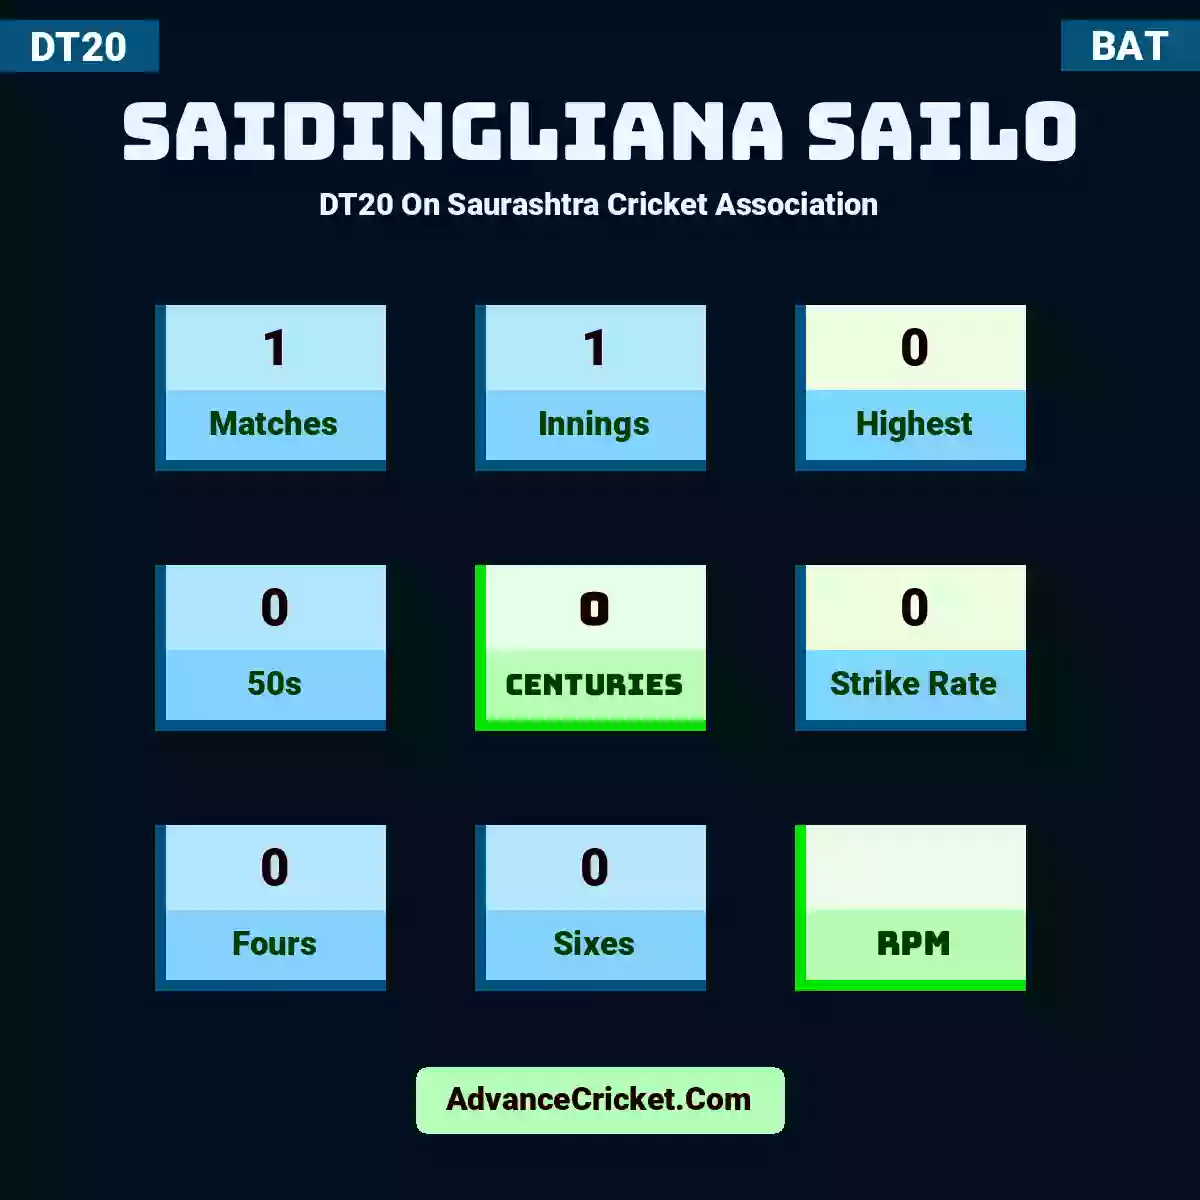 Saidingliana Sailo DT20  On Saurashtra Cricket Association, Saidingliana Sailo played 1 matches, scored 0 runs as highest, 0 half-centuries, and 0 centuries, with a strike rate of 0. S.Sailo hit 0 fours and 0 sixes.